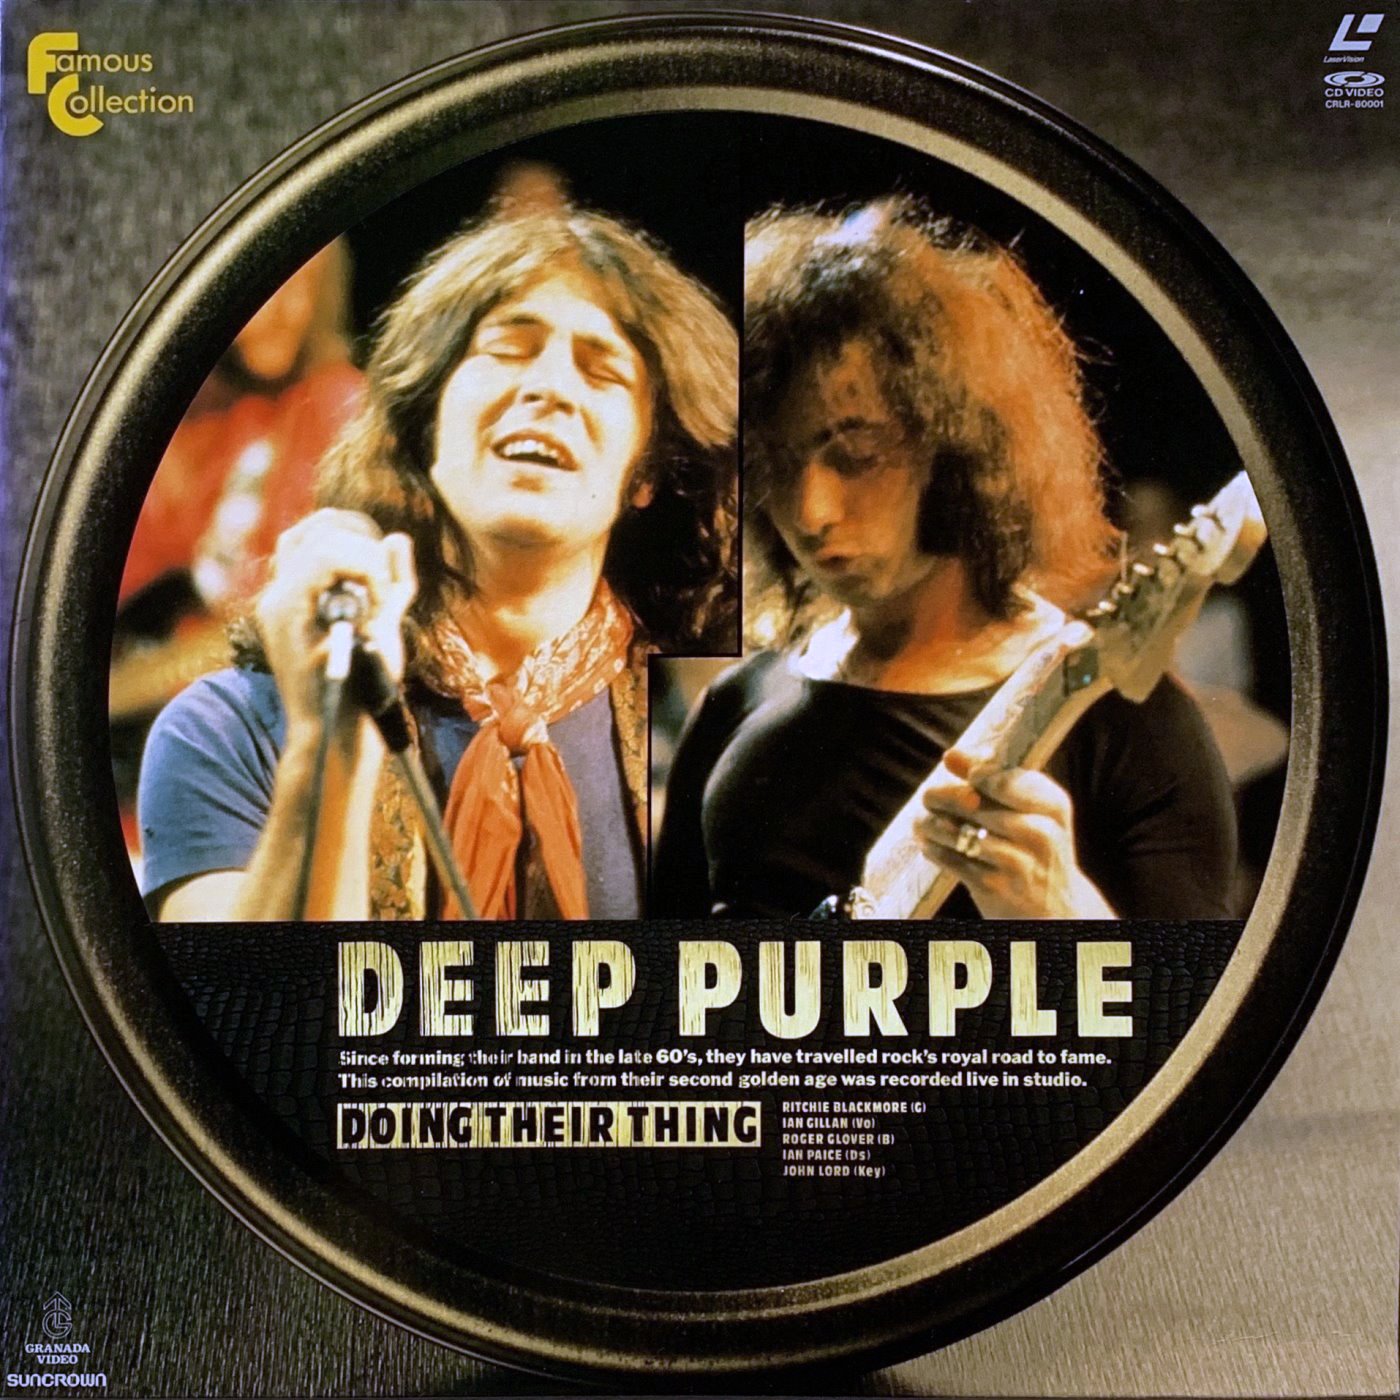 Cover - Deep Purple - Doing Their Thing.jpg